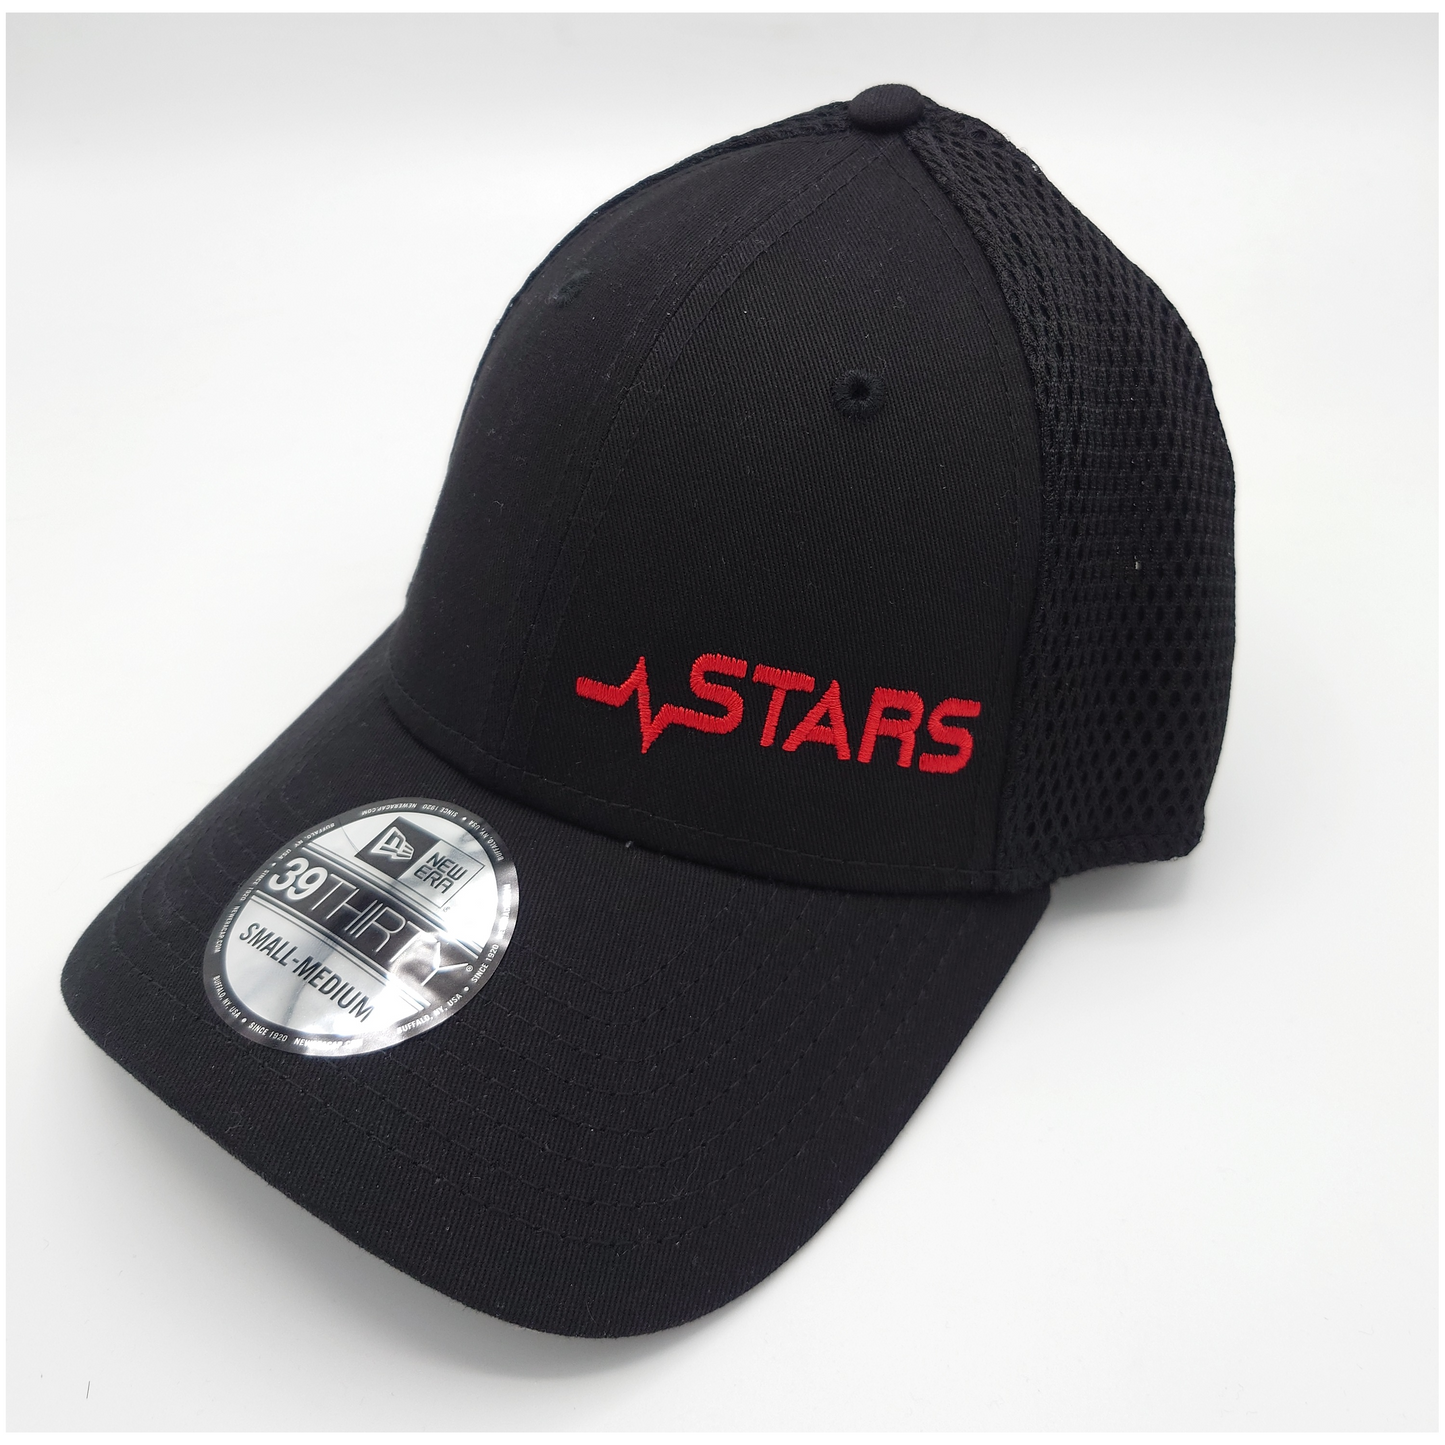 STARS Flex Fit Mesh Cap